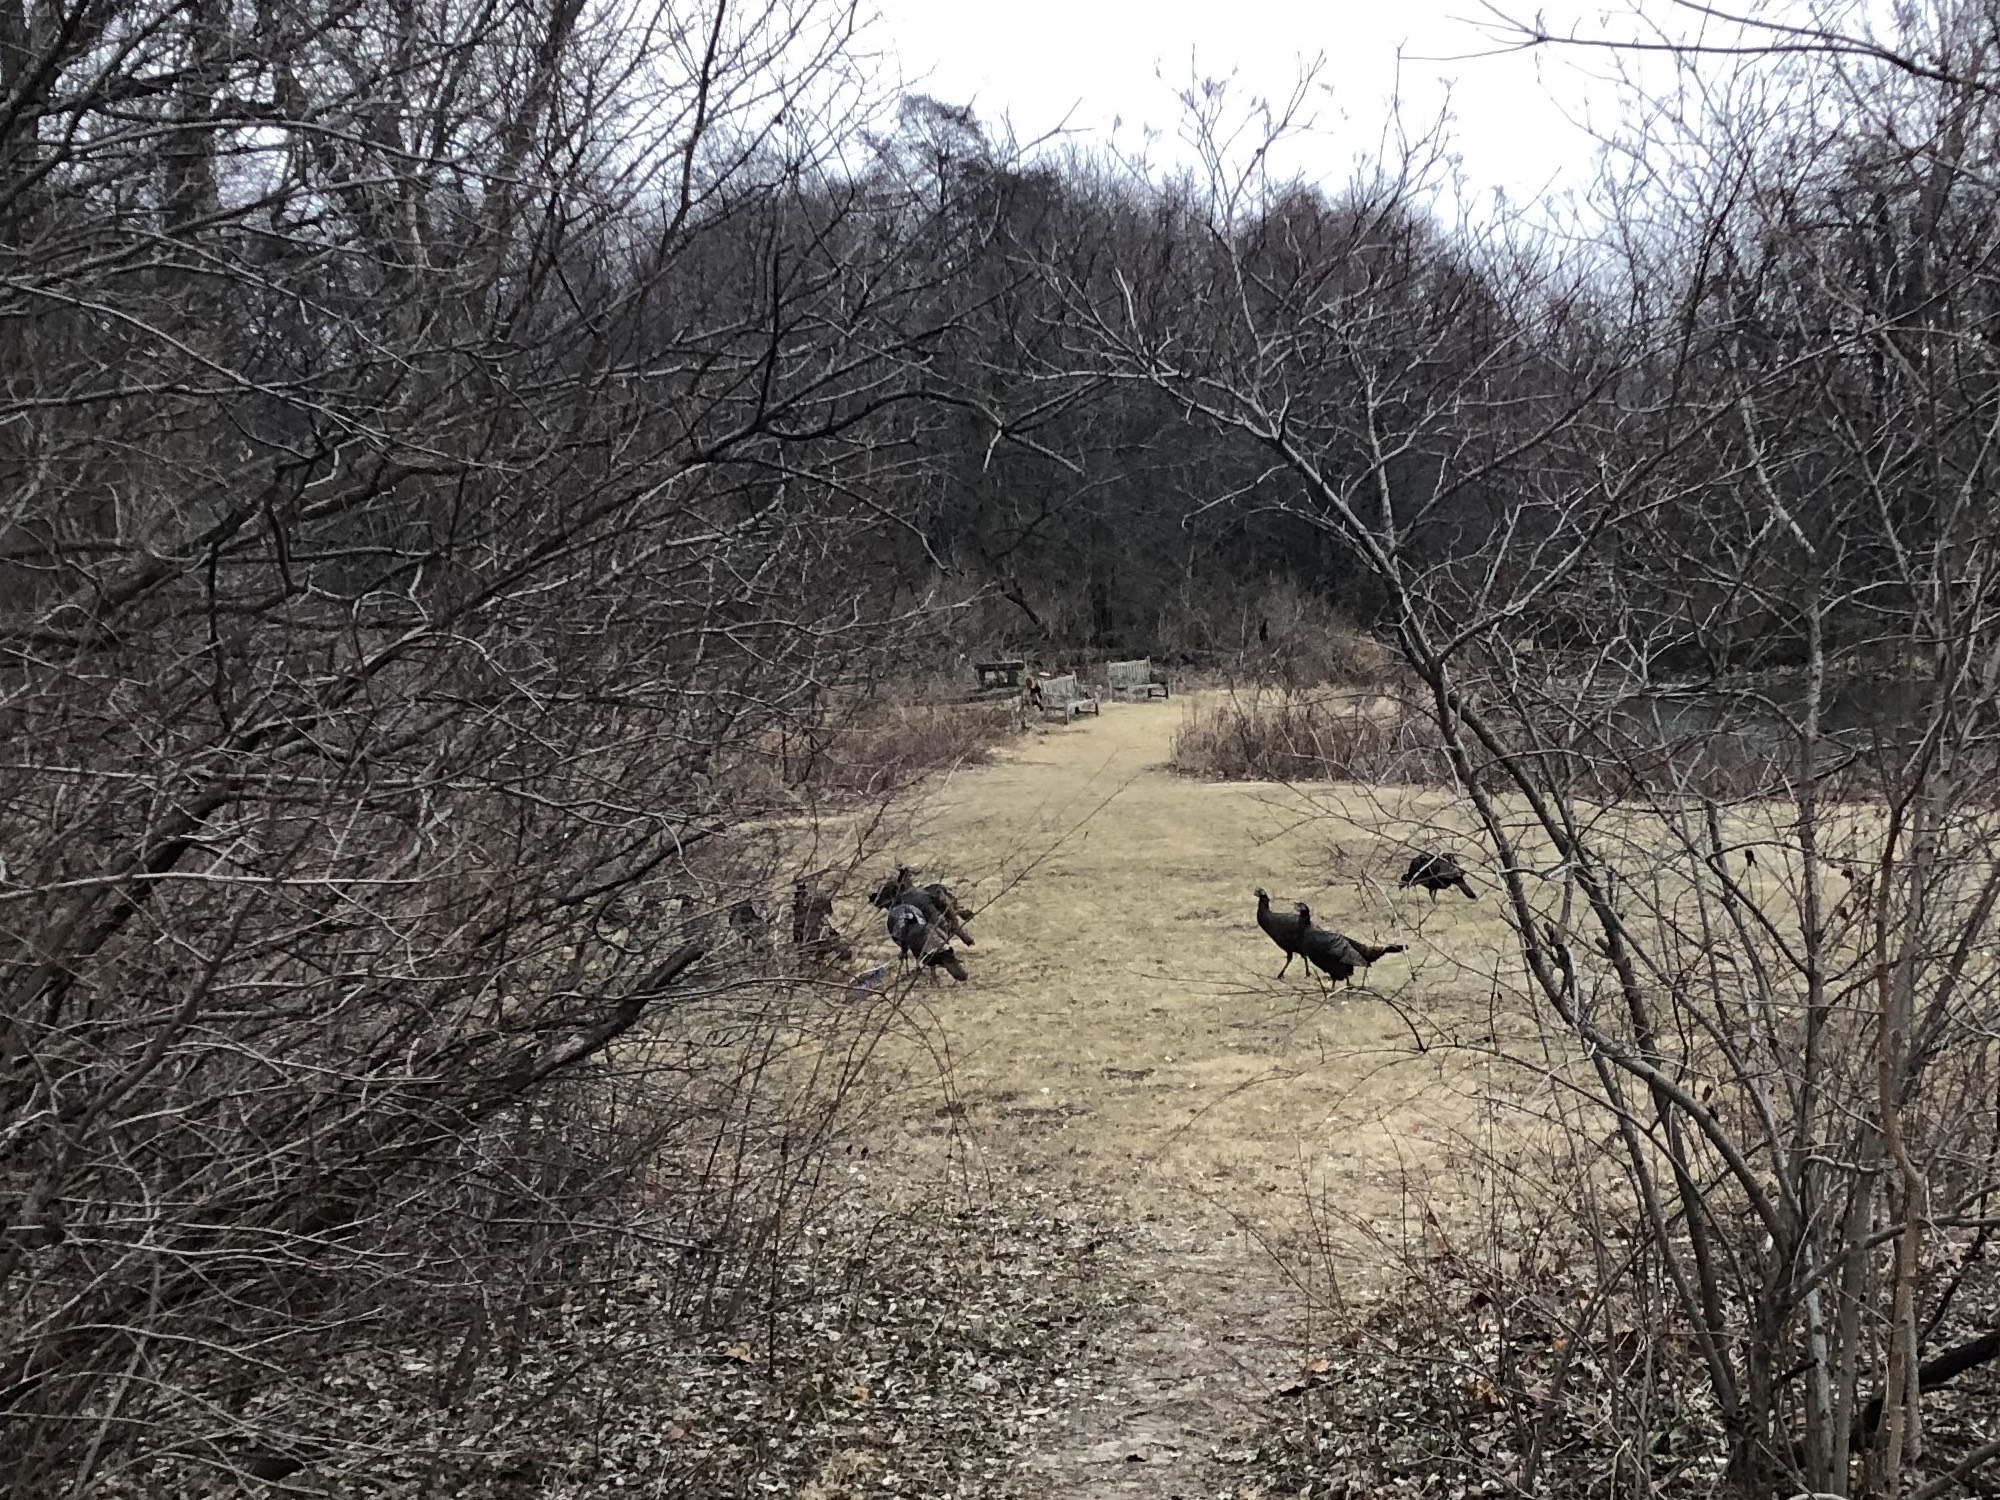 Wild Turkeys near Duck Pond in Madison, Wisconsin on January 9, 2019.